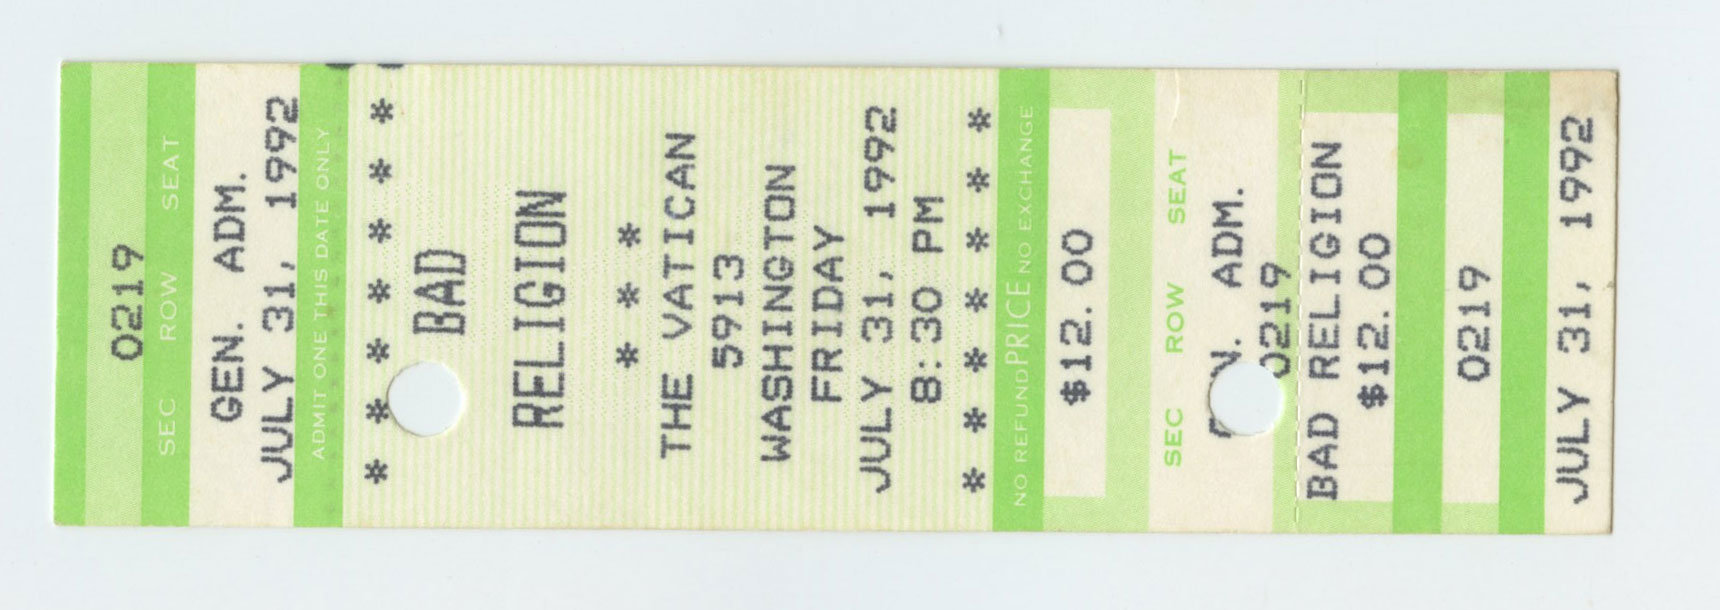 Bad Religion Vintage Ticket Stub 1992 Jul 31 The Vatican Houston